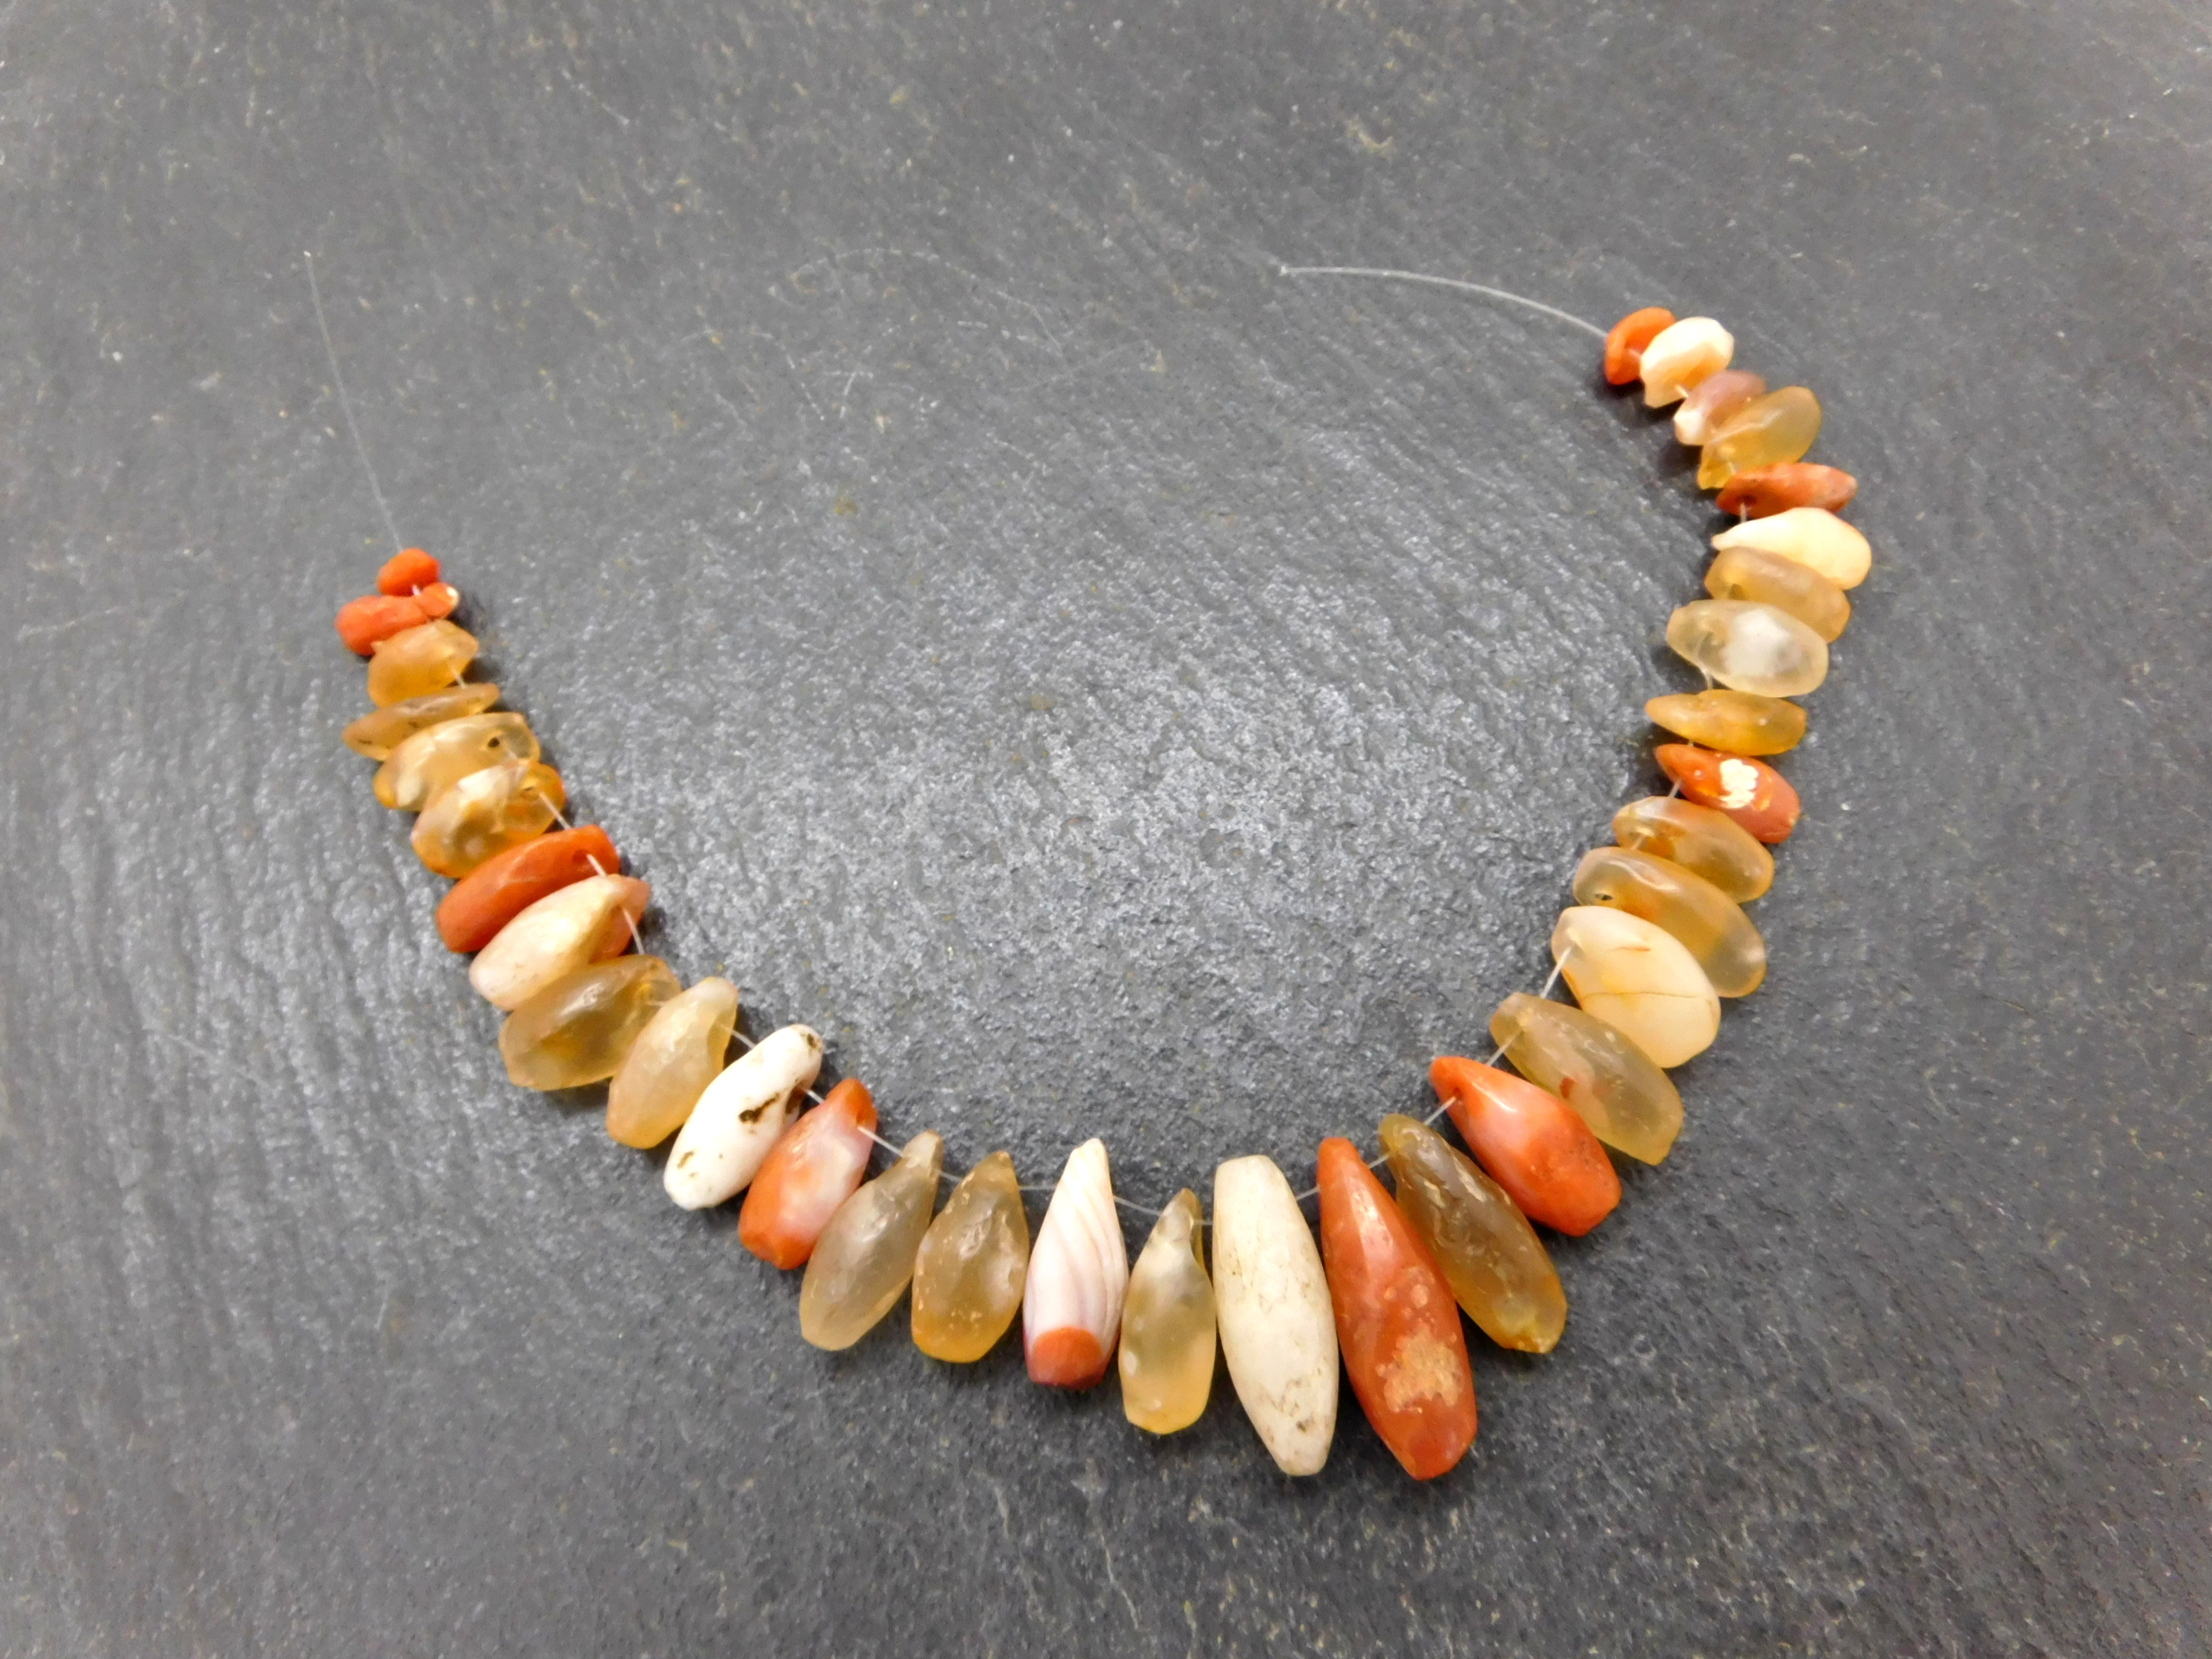 small stone pendants from Sahara desert, very rare, teeth, teardrops - quartz, jasper, agate, carnelian